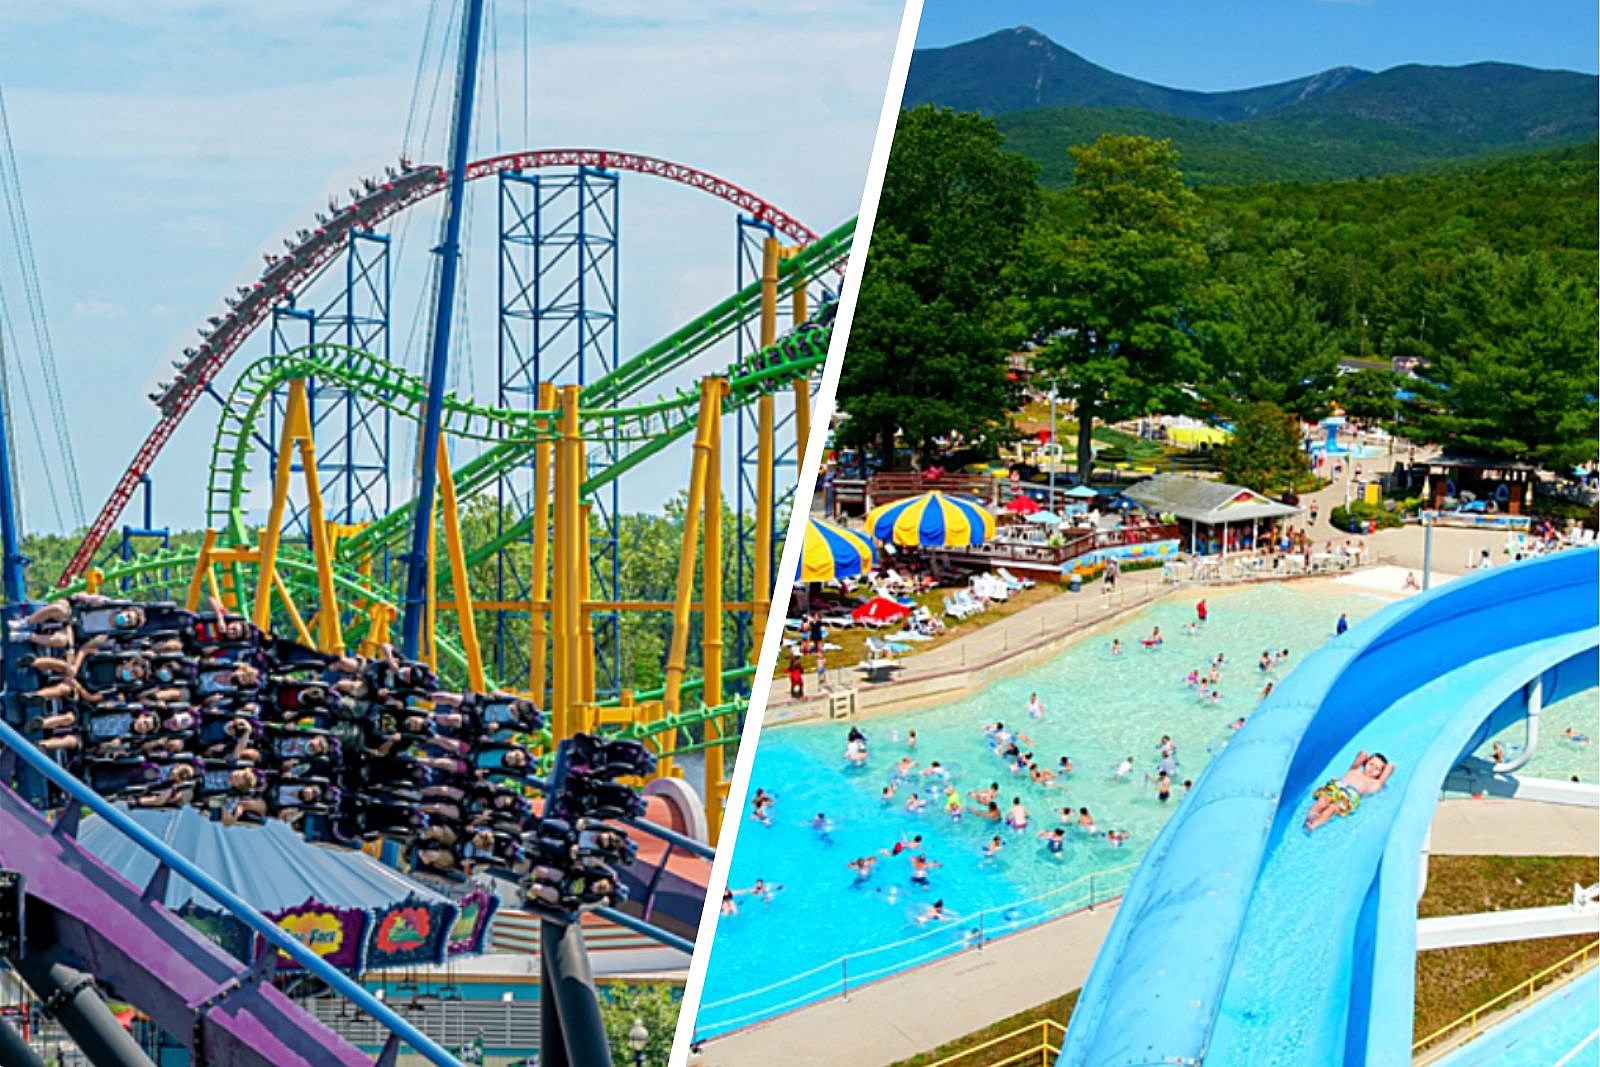 Visit Maine's Largest Amusement & Water Park at Funtown, Splashtown, USA